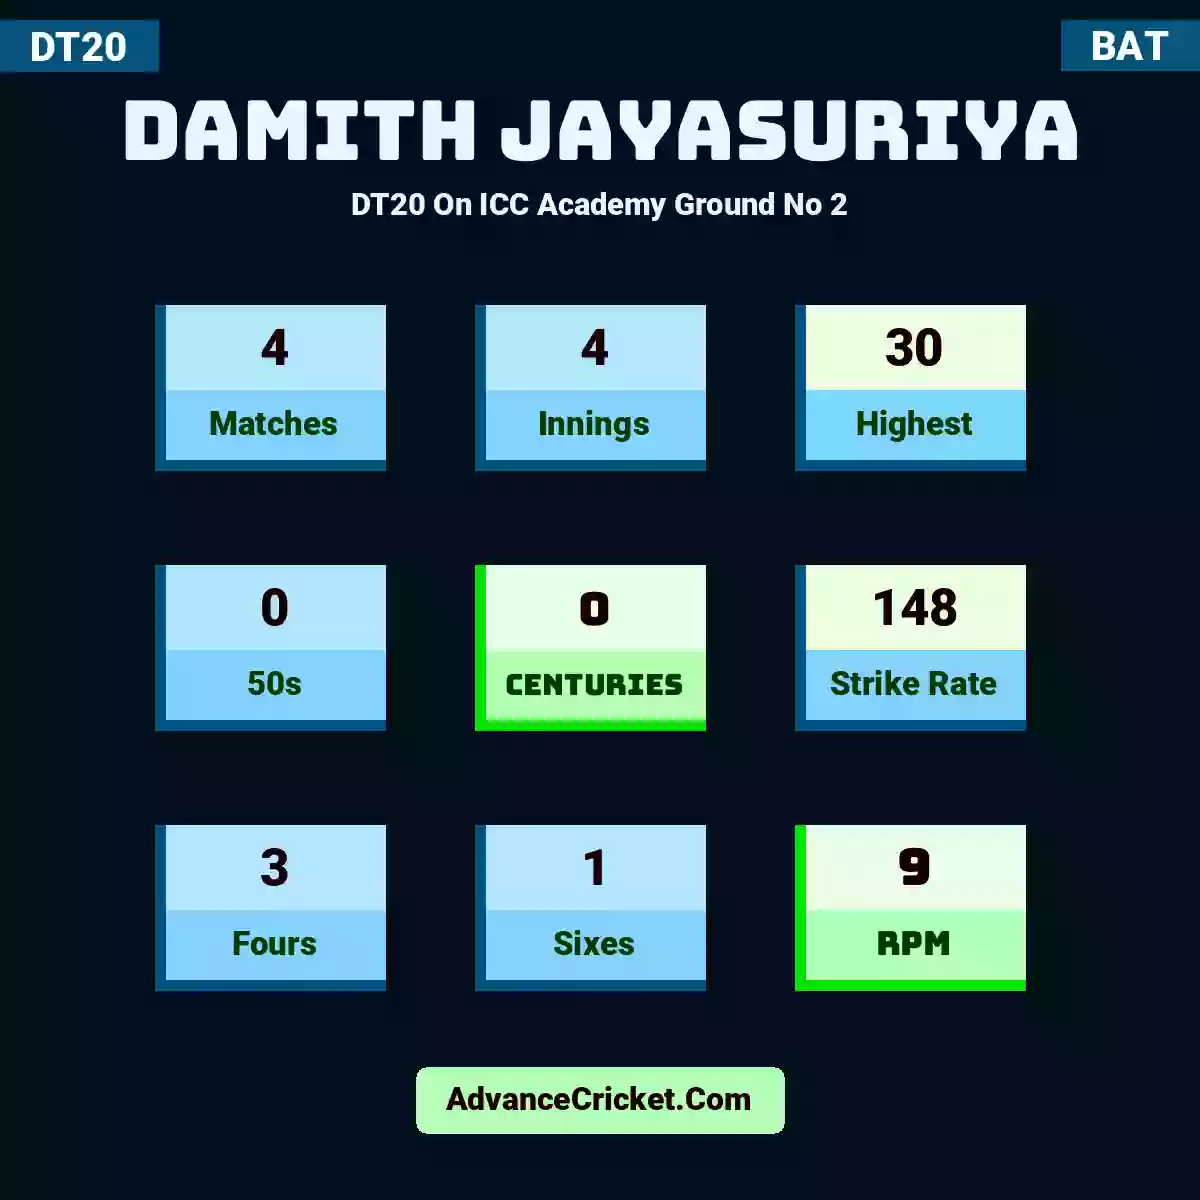 Damith Jayasuriya DT20  On ICC Academy Ground No 2, Damith Jayasuriya played 4 matches, scored 30 runs as highest, 0 half-centuries, and 0 centuries, with a strike rate of 148. D.Jayasuriya hit 3 fours and 1 sixes, with an RPM of 9.